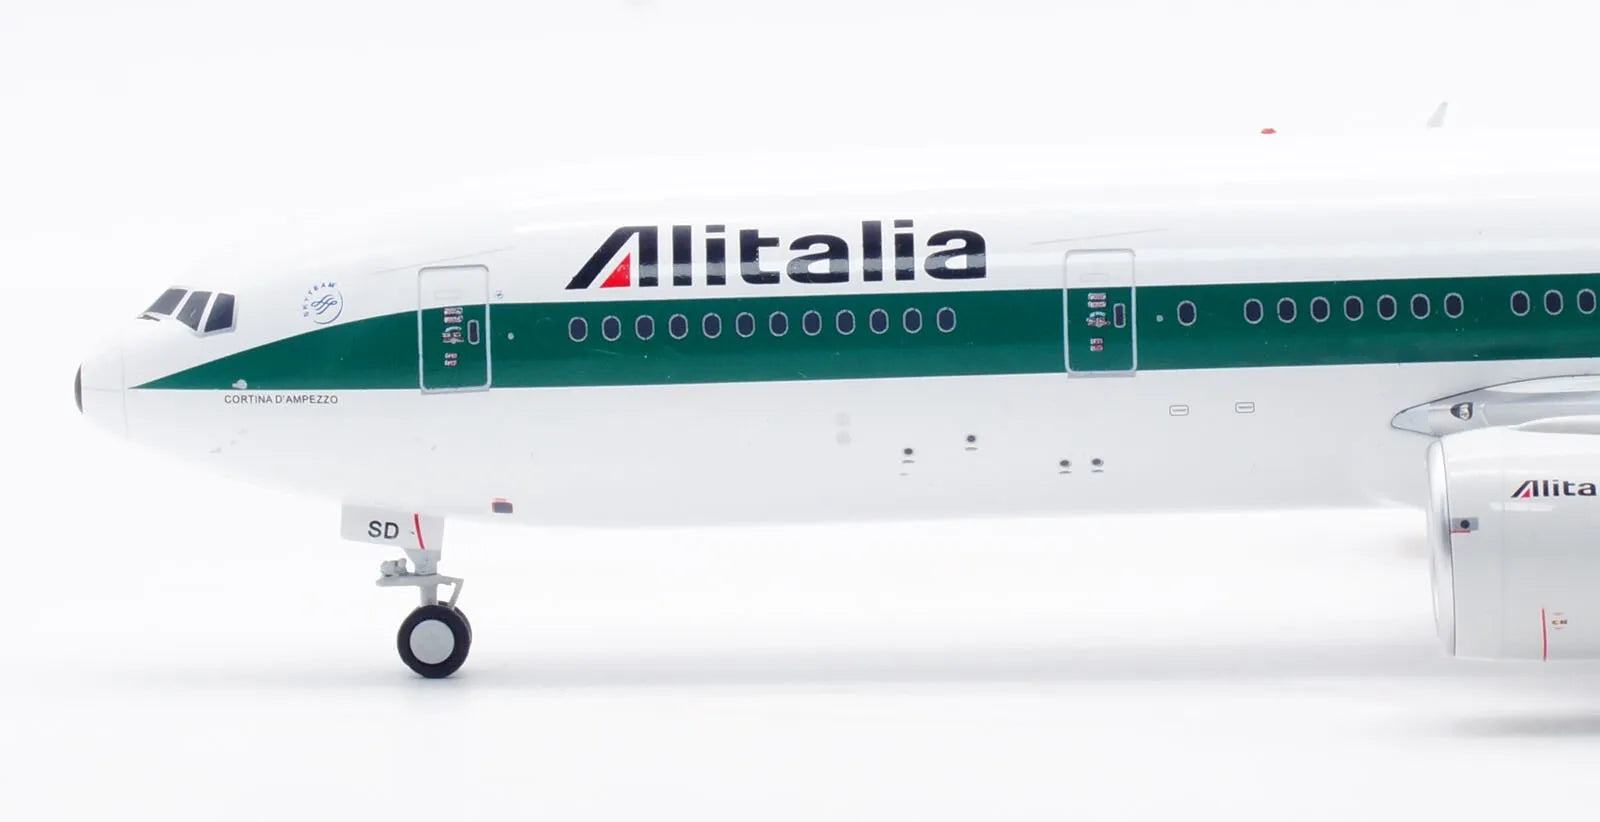 Alitalia / Boeing 777-200 / I-DISD / IF772AZ1223 /  elaviadormodels